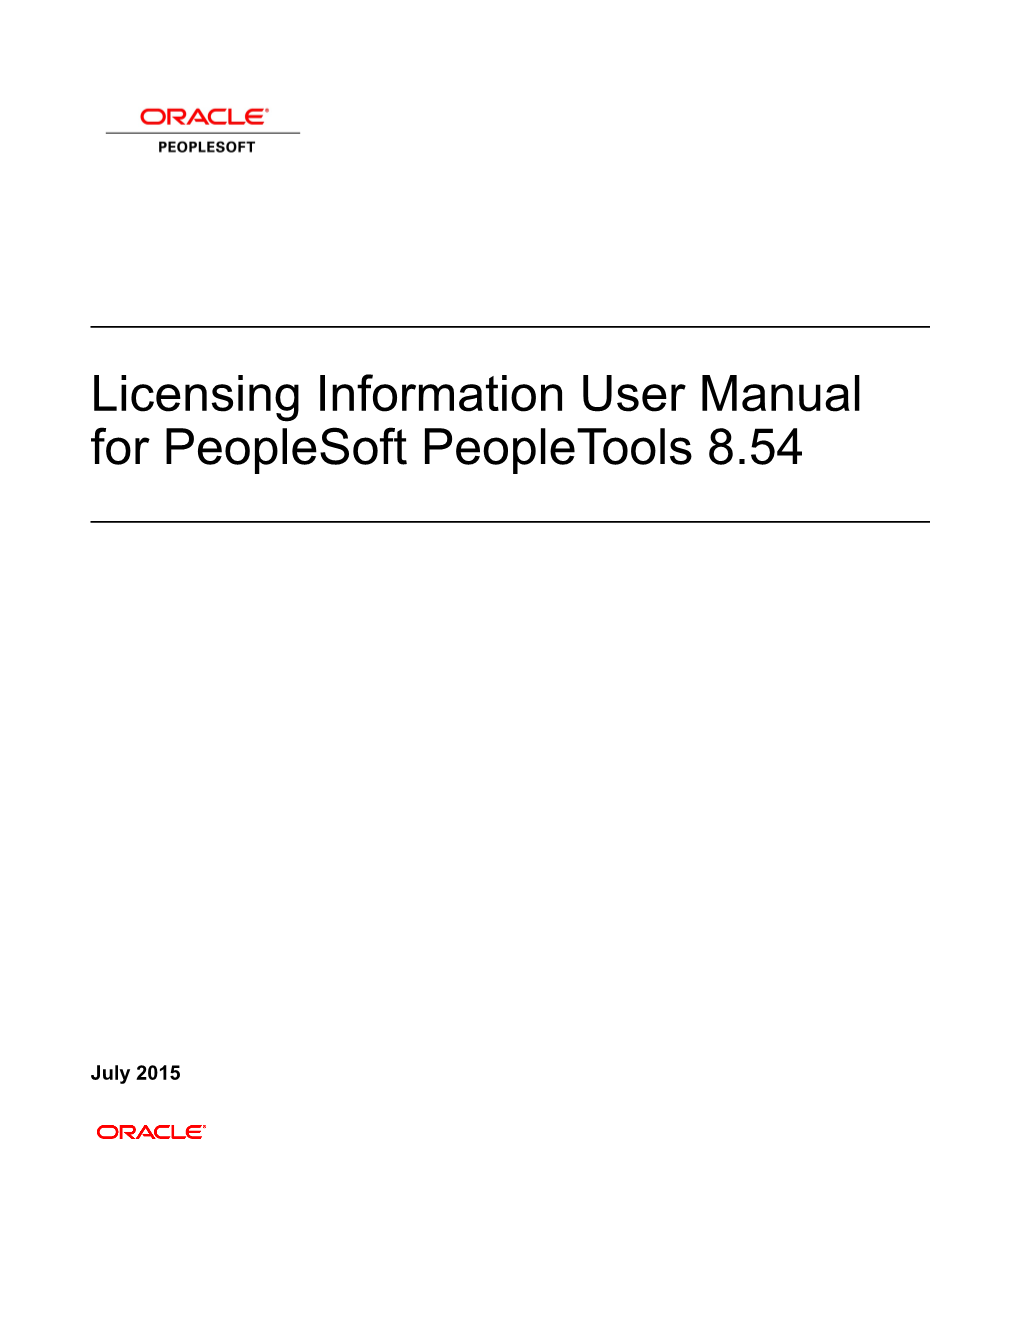 Licensing Information User Manual for Peoplesoft Peopletools 8.54